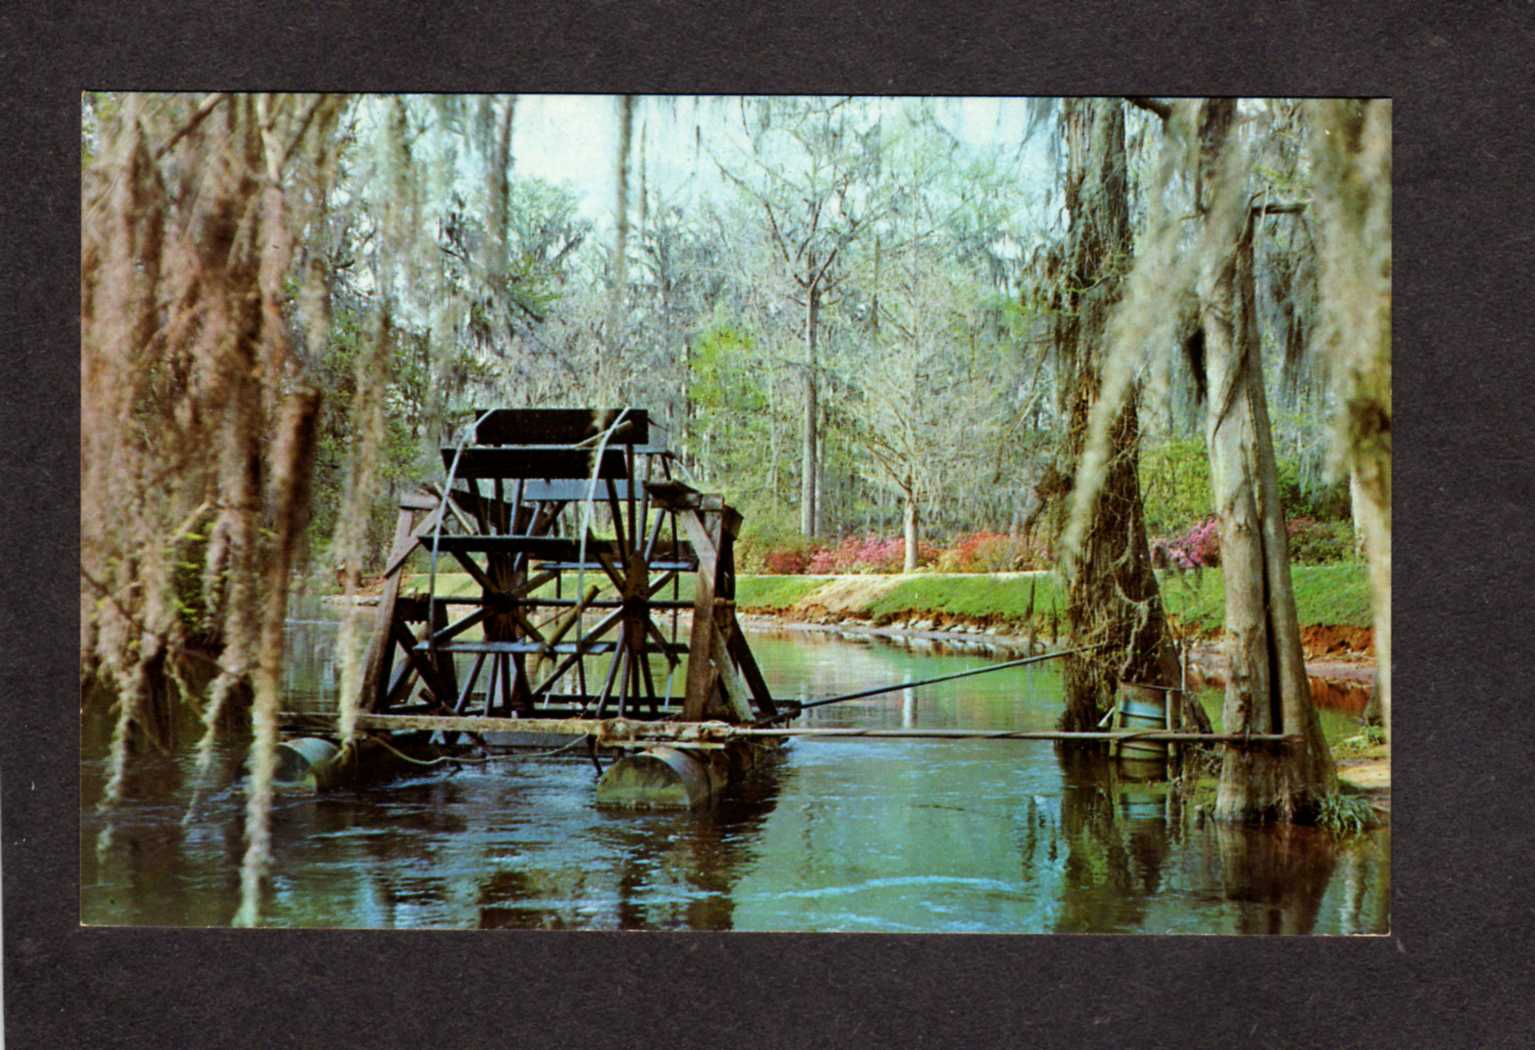 Sc Water Wheel Edisto Memorial Gardens Orangeburg South Carolina